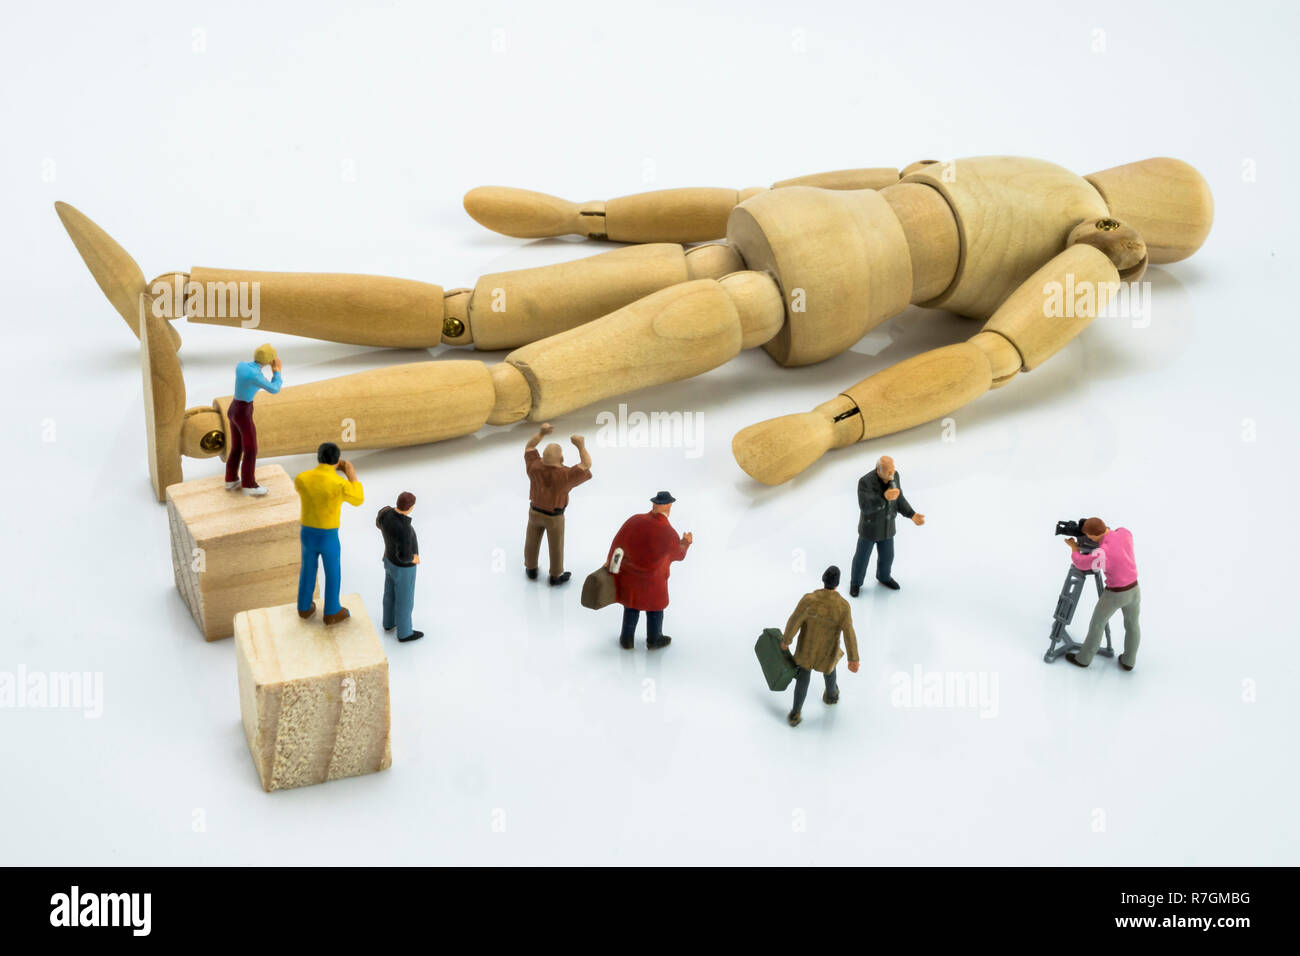 Miniature figures surrounding wood doll, conceptual image Stock Photo